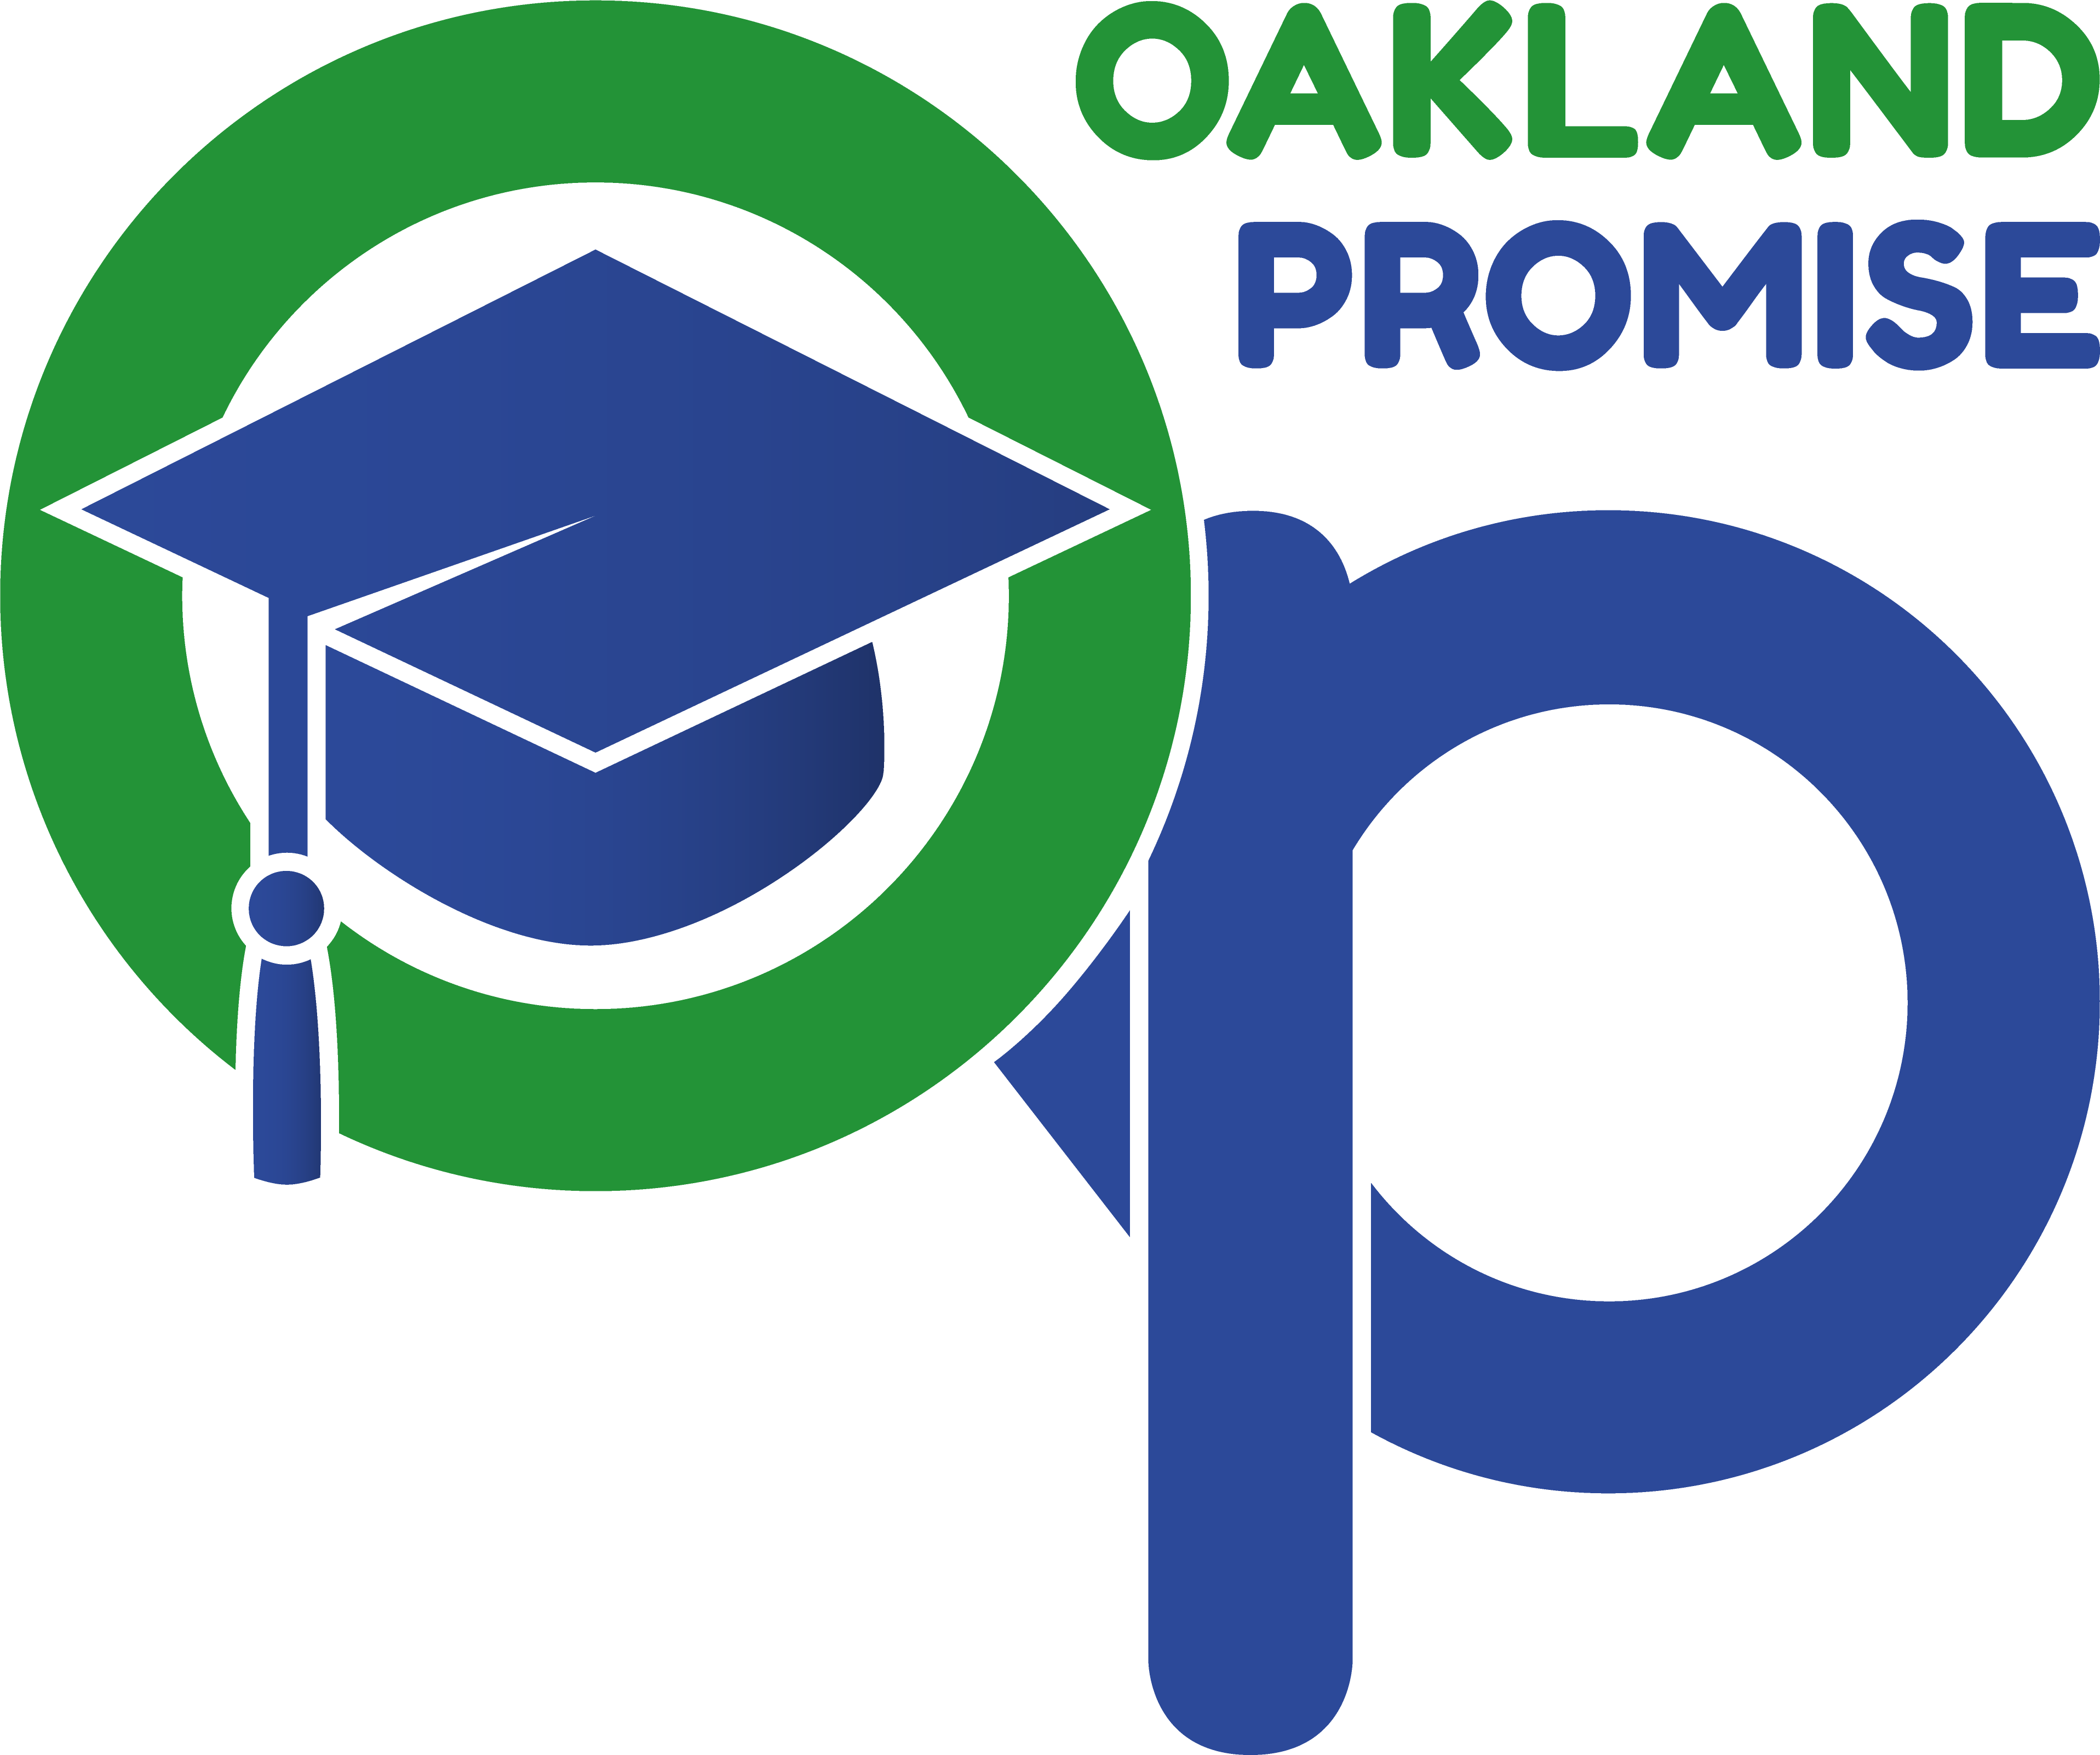 OP logo